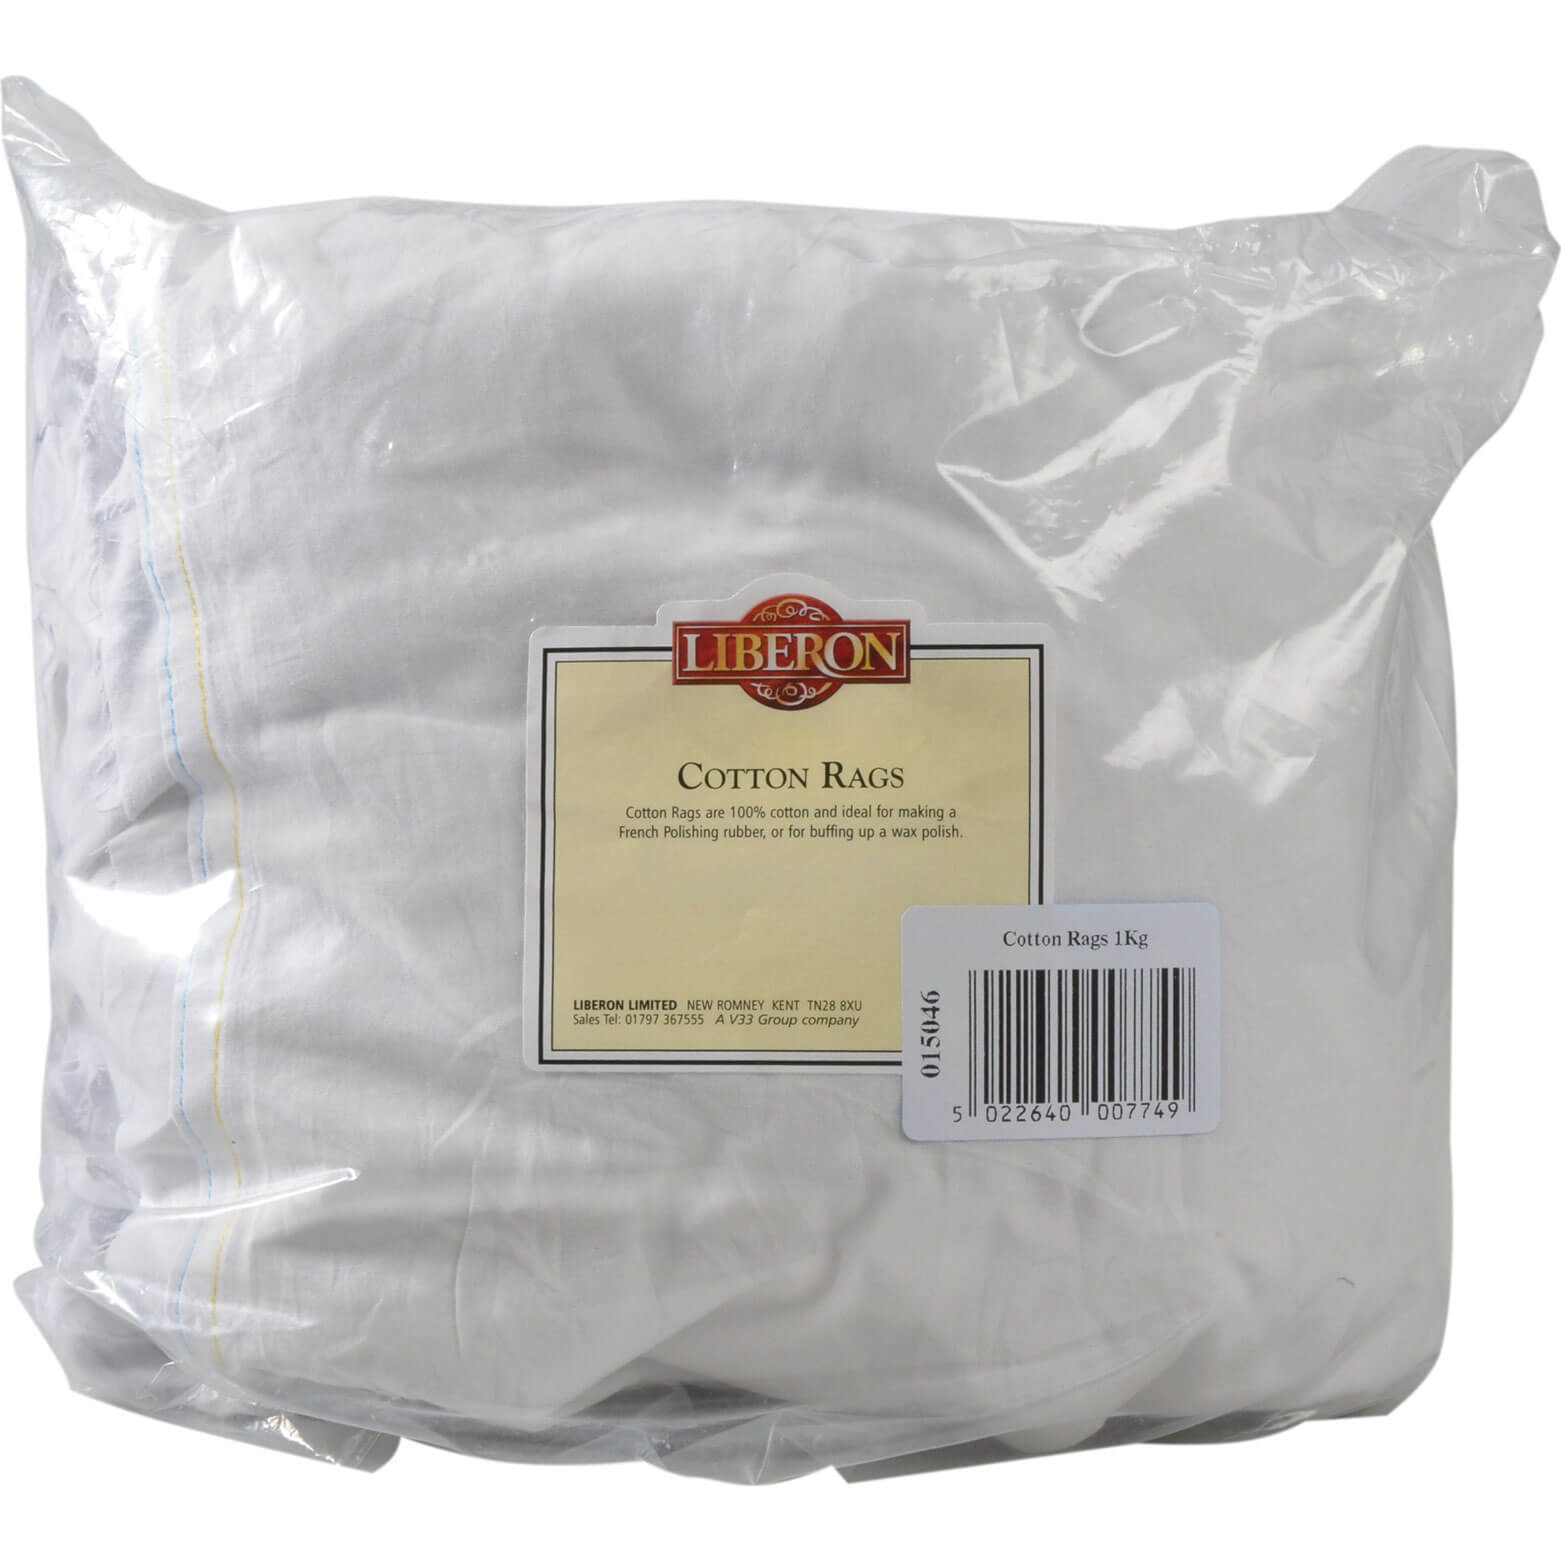 Photo of Liberon Cotton Rags 1kg